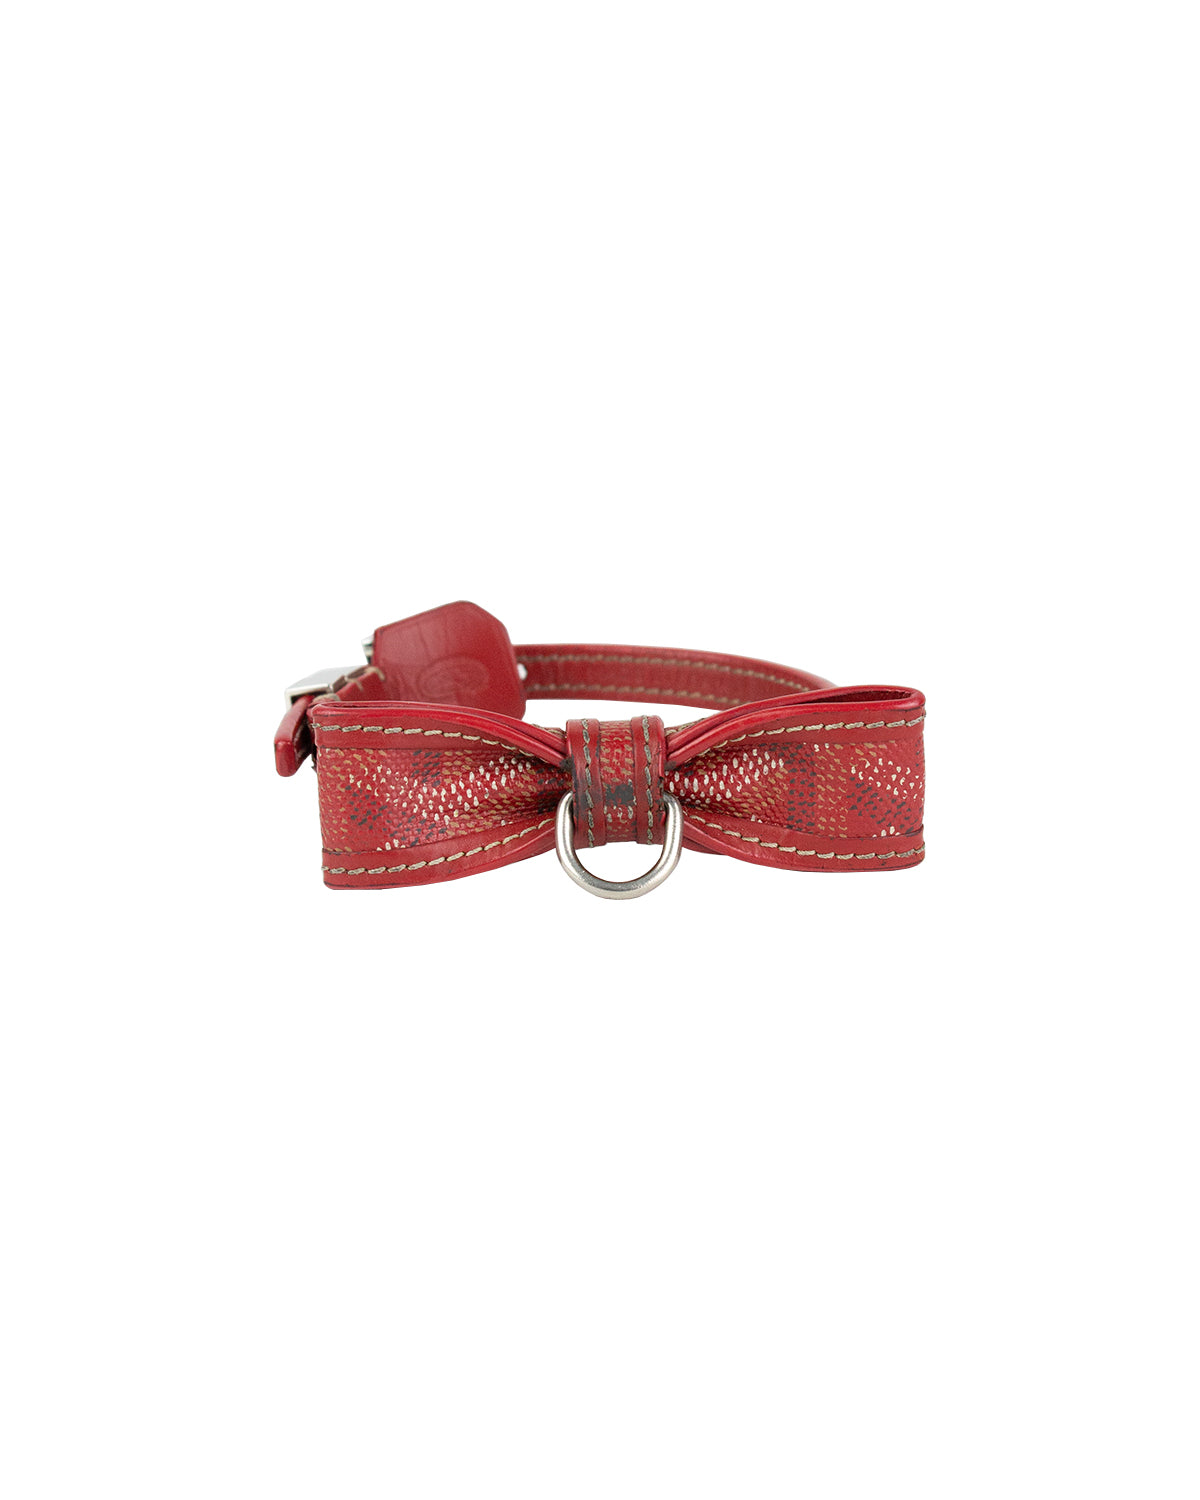 Goyard Vintage Edmond Dog Collar - Red Pet Accessories, Decor